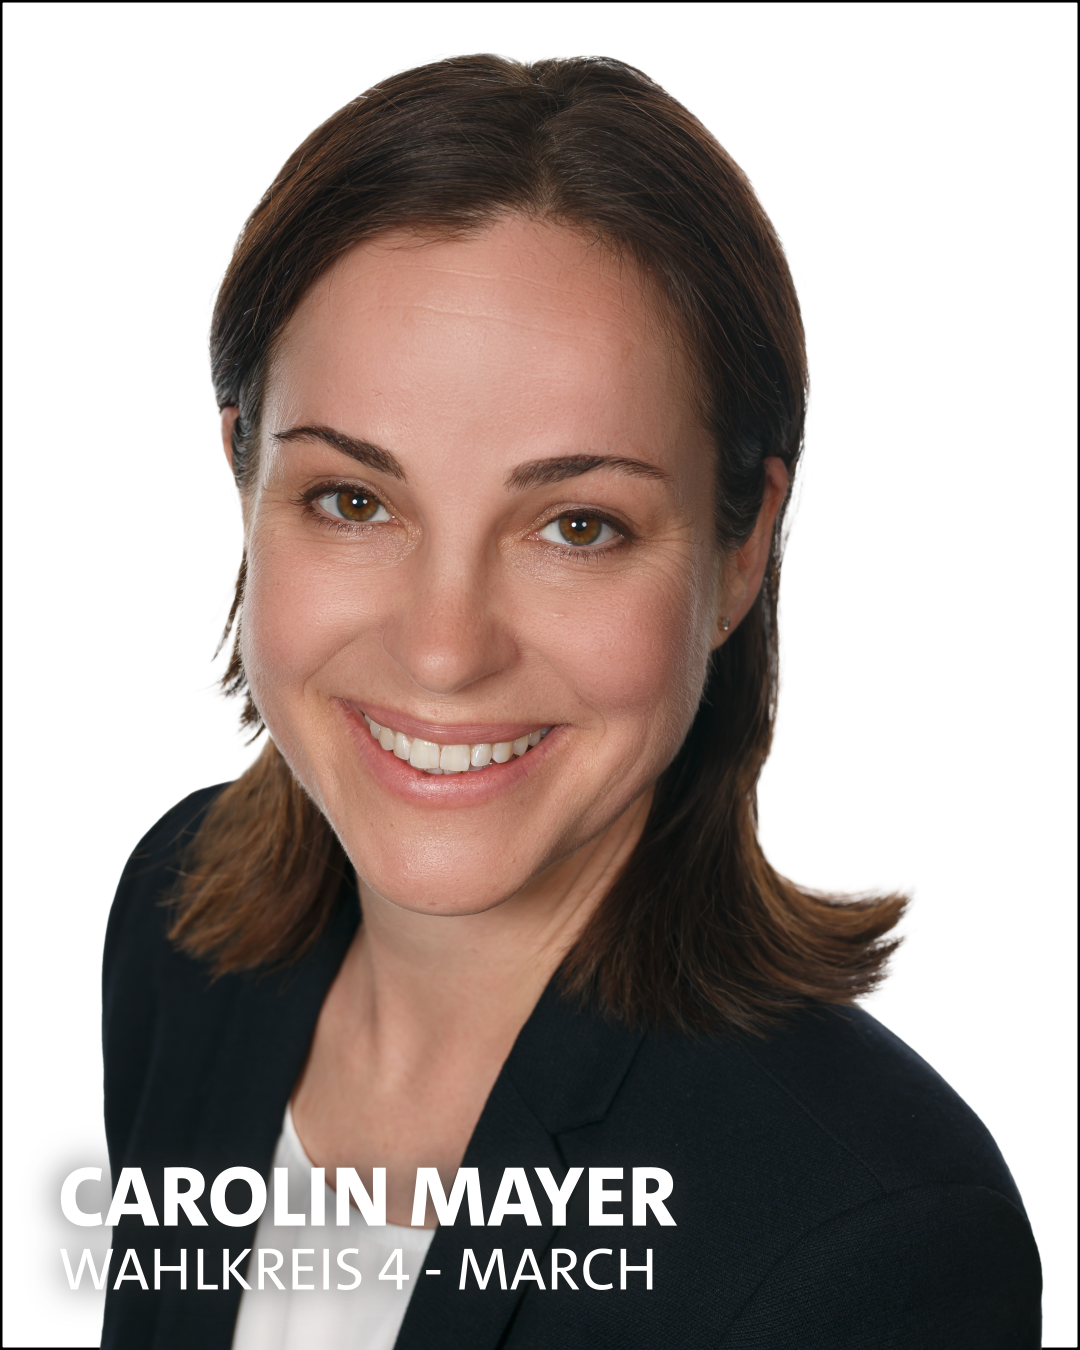 Carolin Mayer